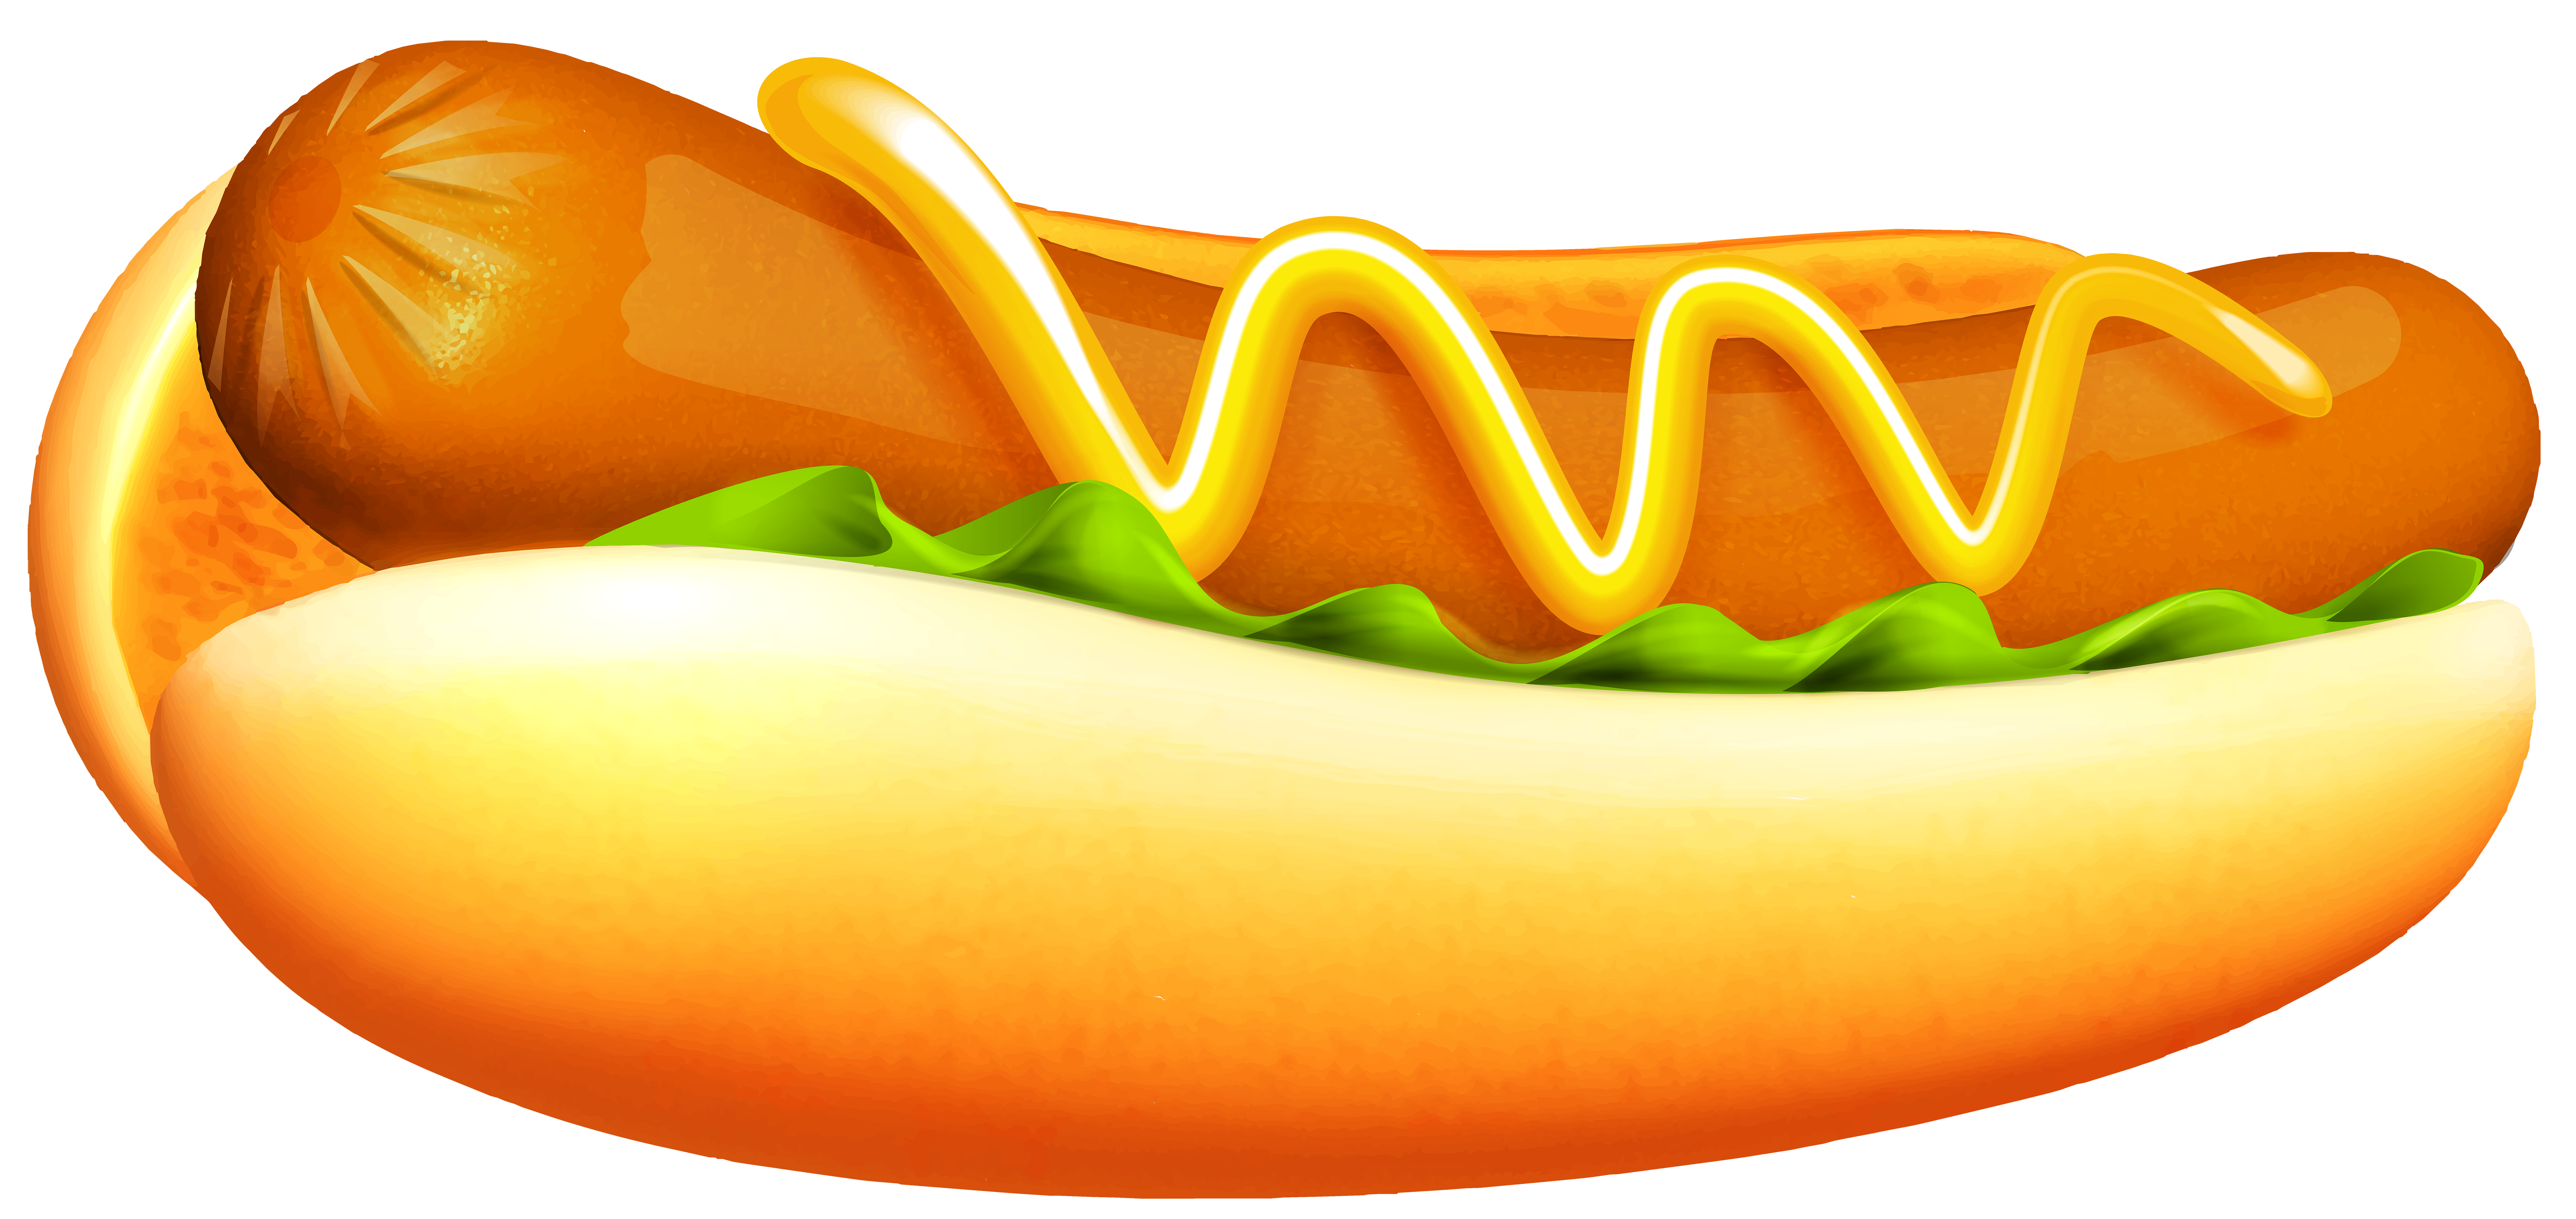 Hot Dog Transparent PNG Clipart Image.